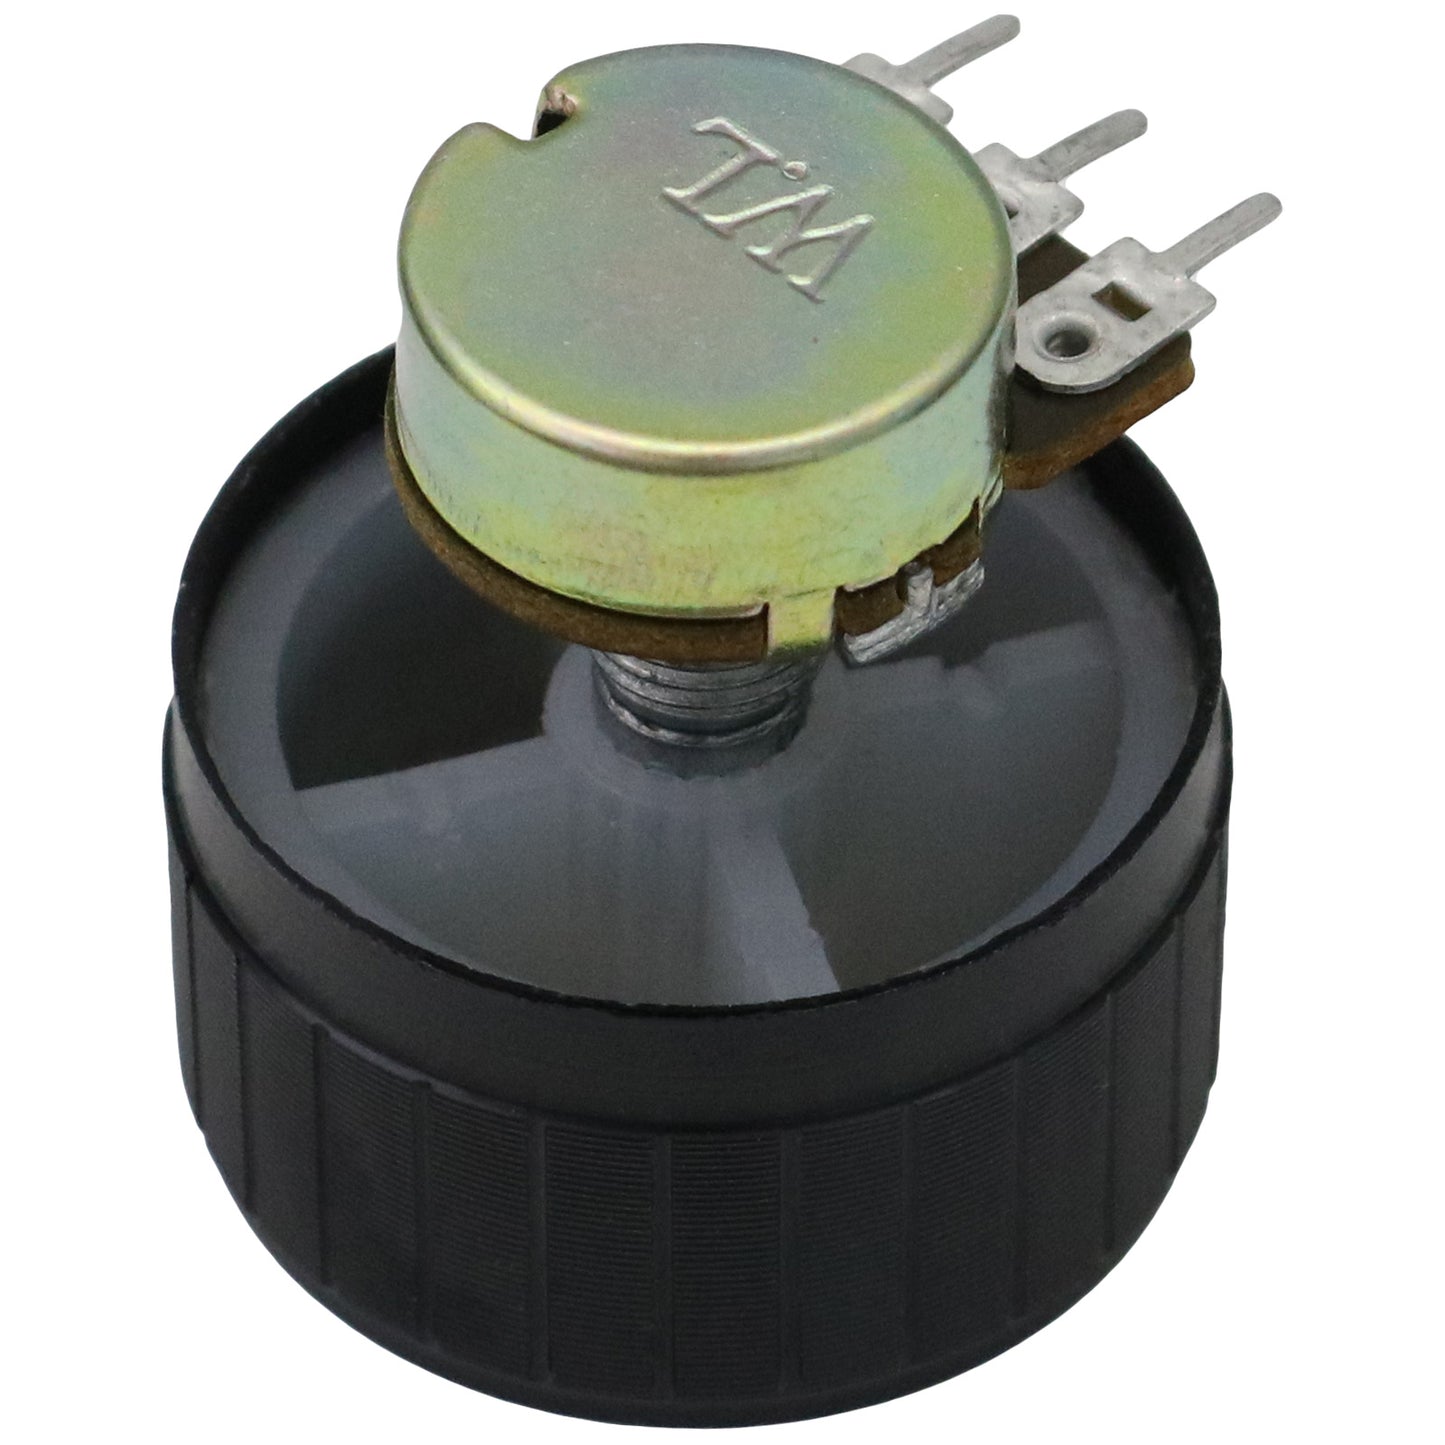 Black Aluminium Shell Amplifier / HiFi Control Knob